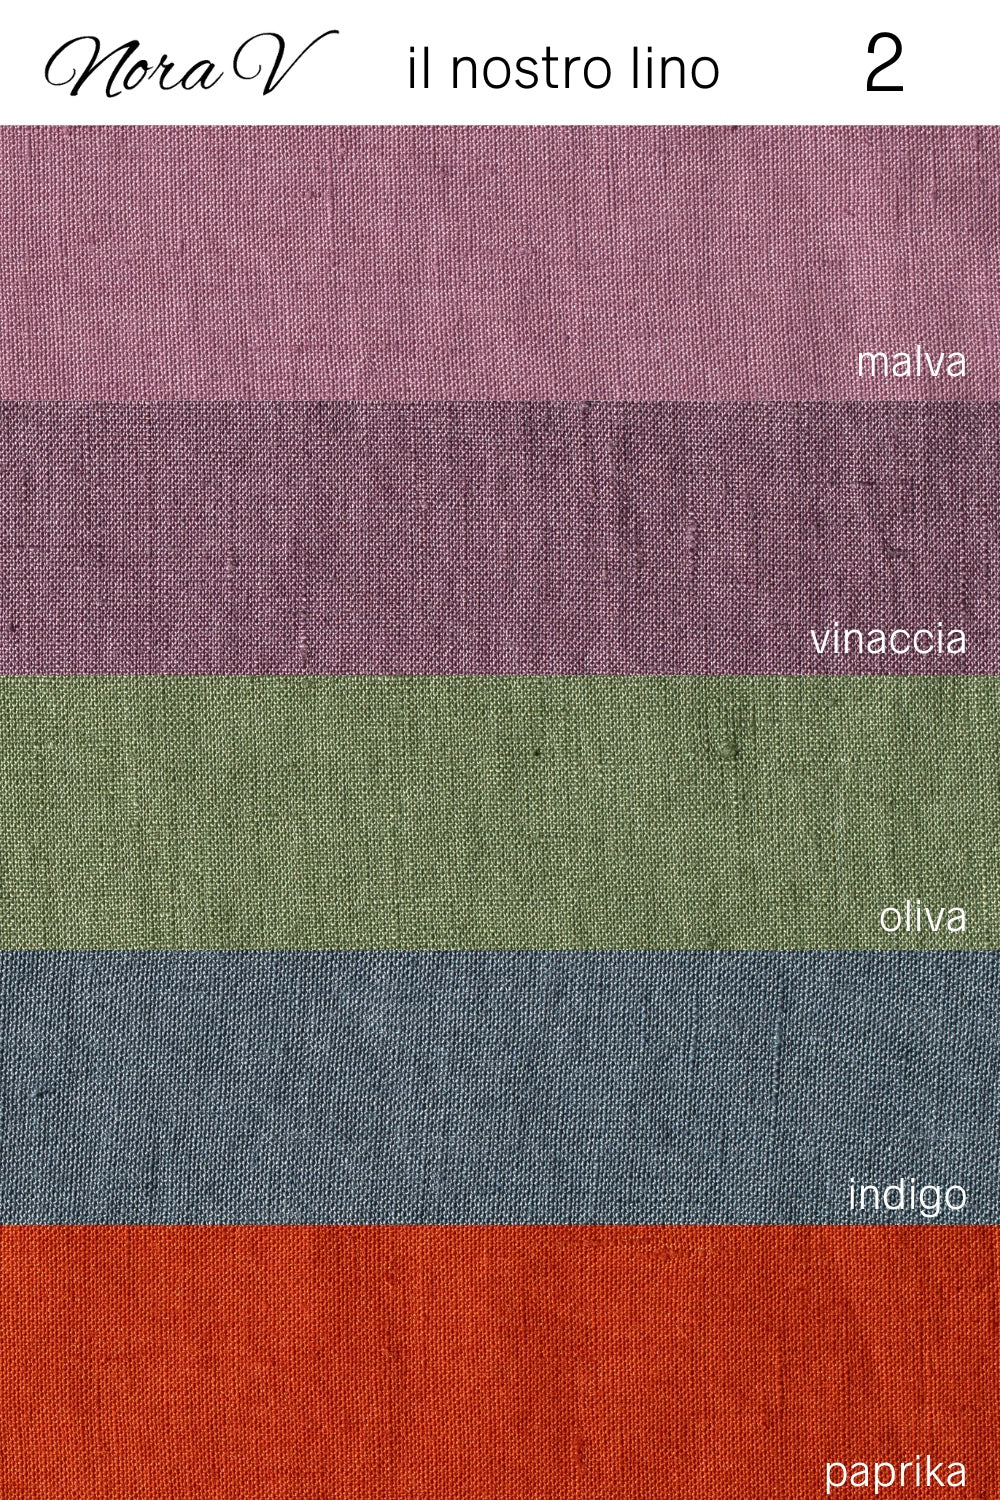 TRIVIA-Pure washed-linen flat top sheet  